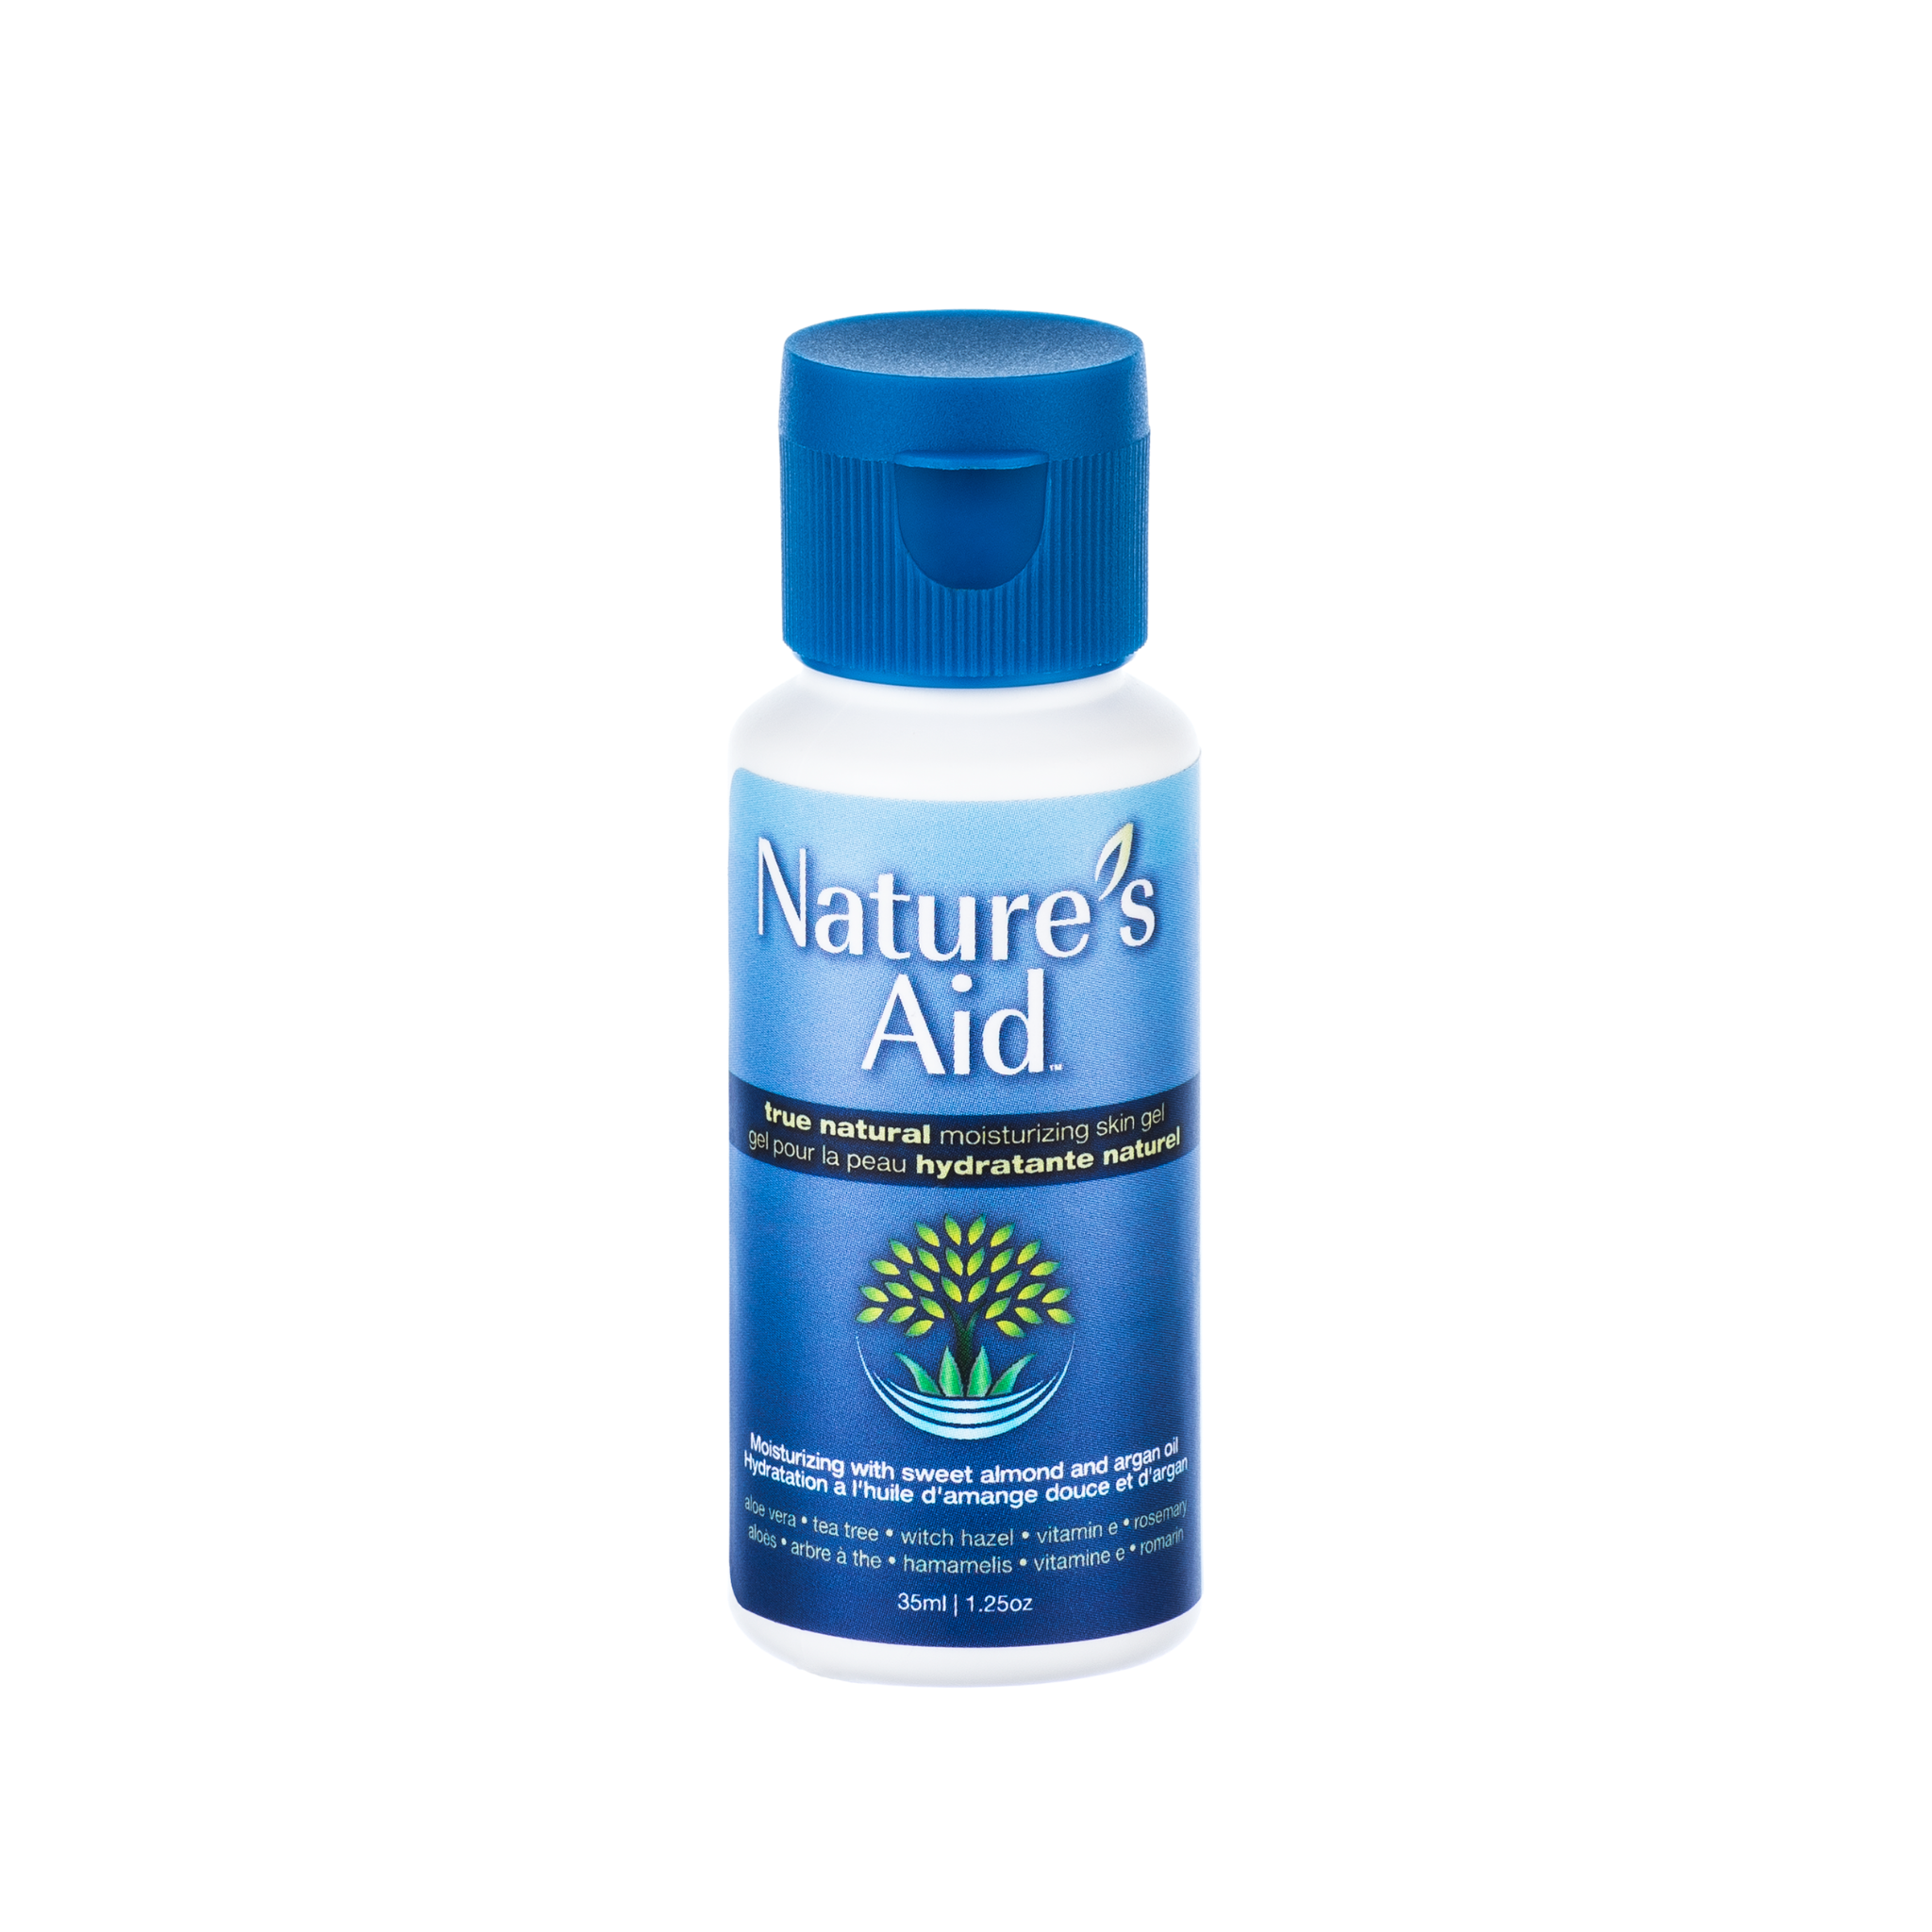 Nature's Aid Moisturizing Skin Gel 35ml